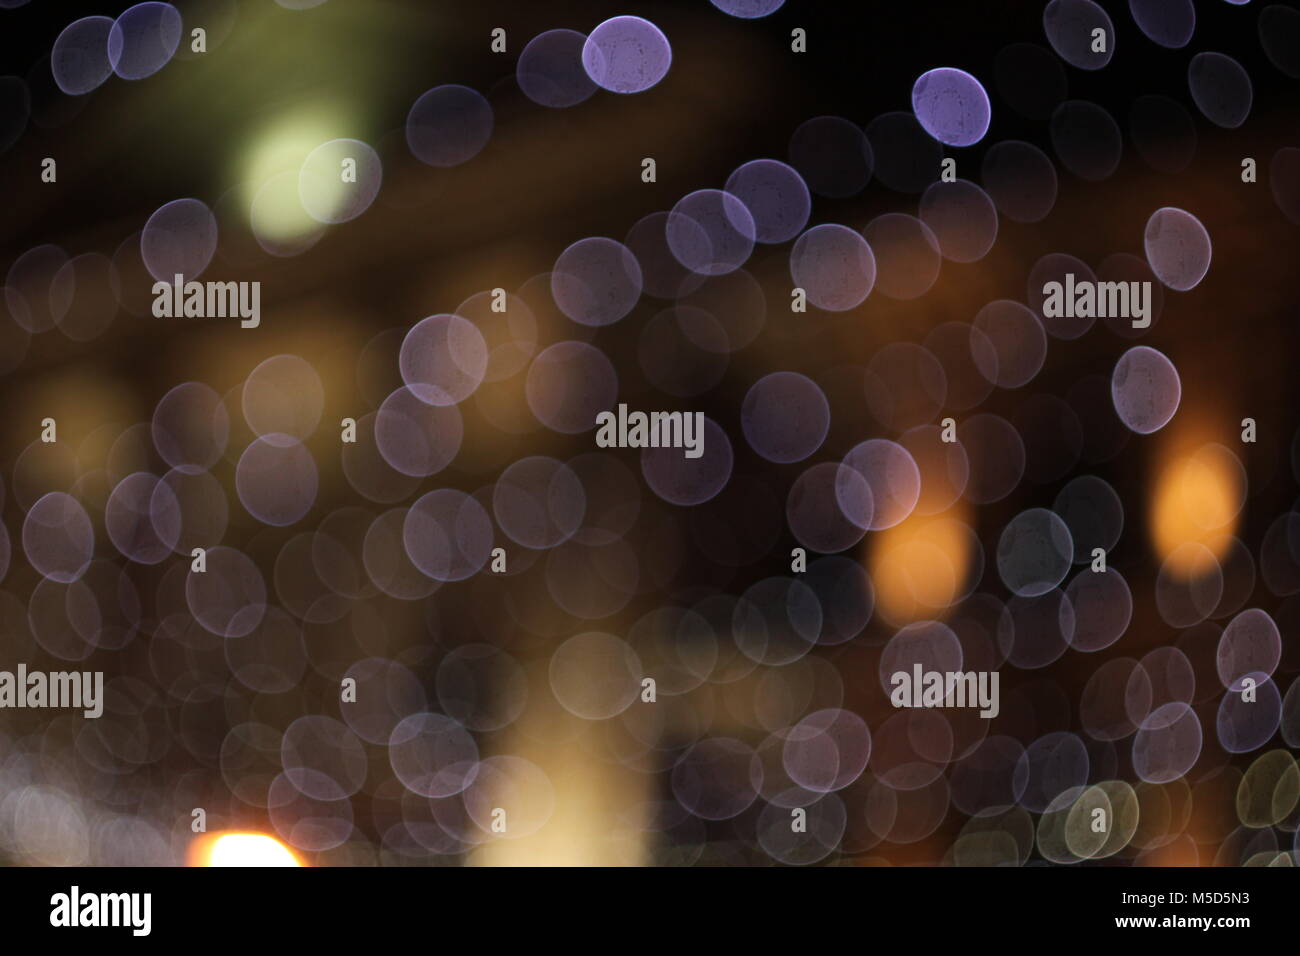 backlighting, blur, blurred, blurring, bokeh, circle, city, dark, garland, lanterns, light, night, shadow, street, texture Stock Photo